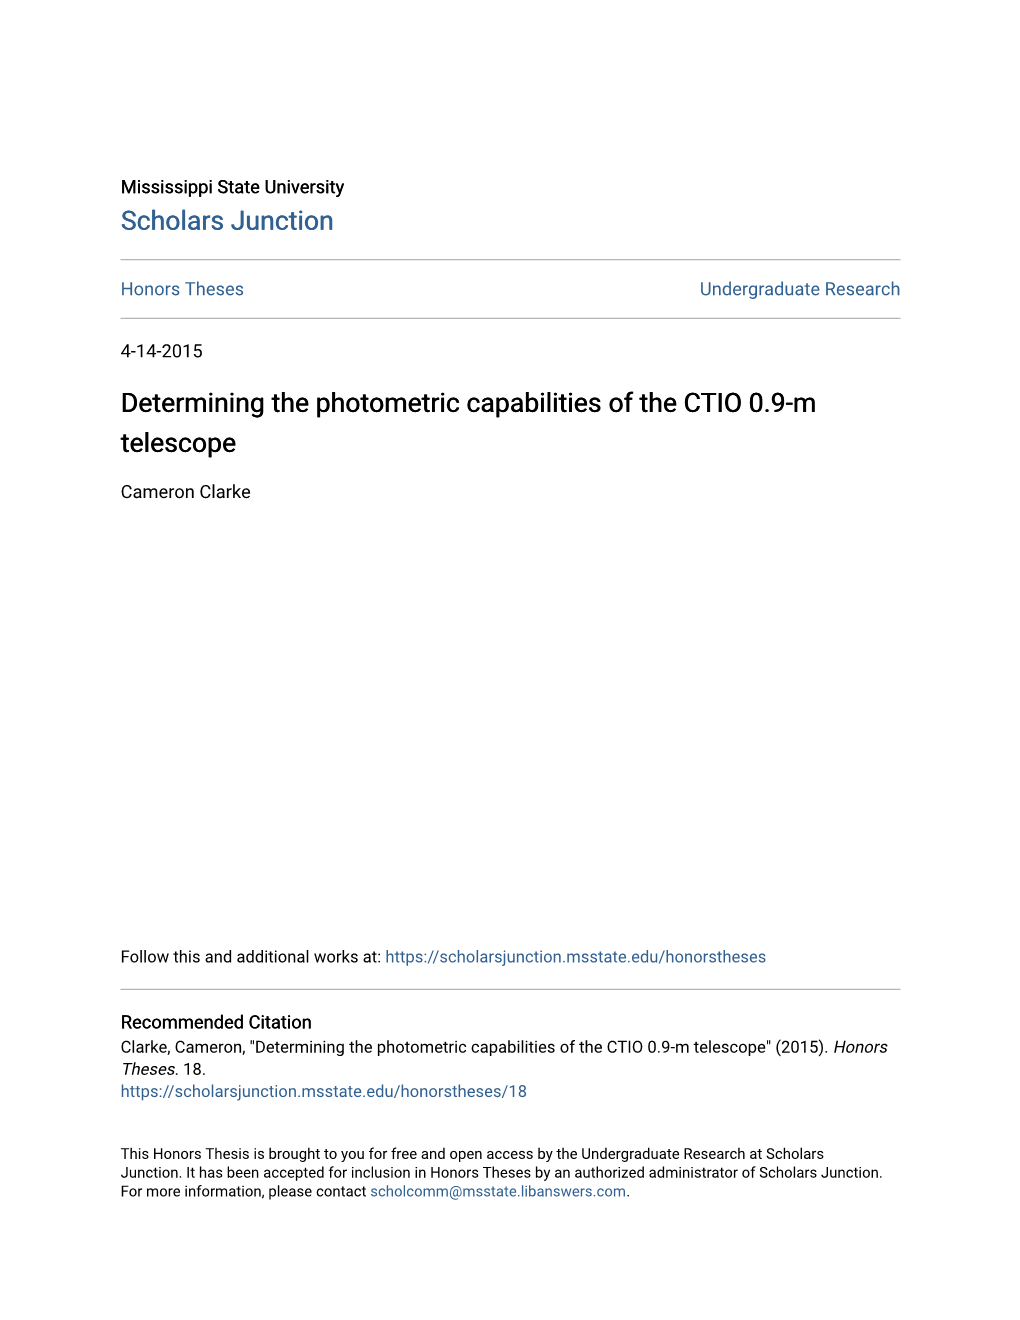 Determining the Photometric Capabilities of the CTIO 0.9-M Telescope